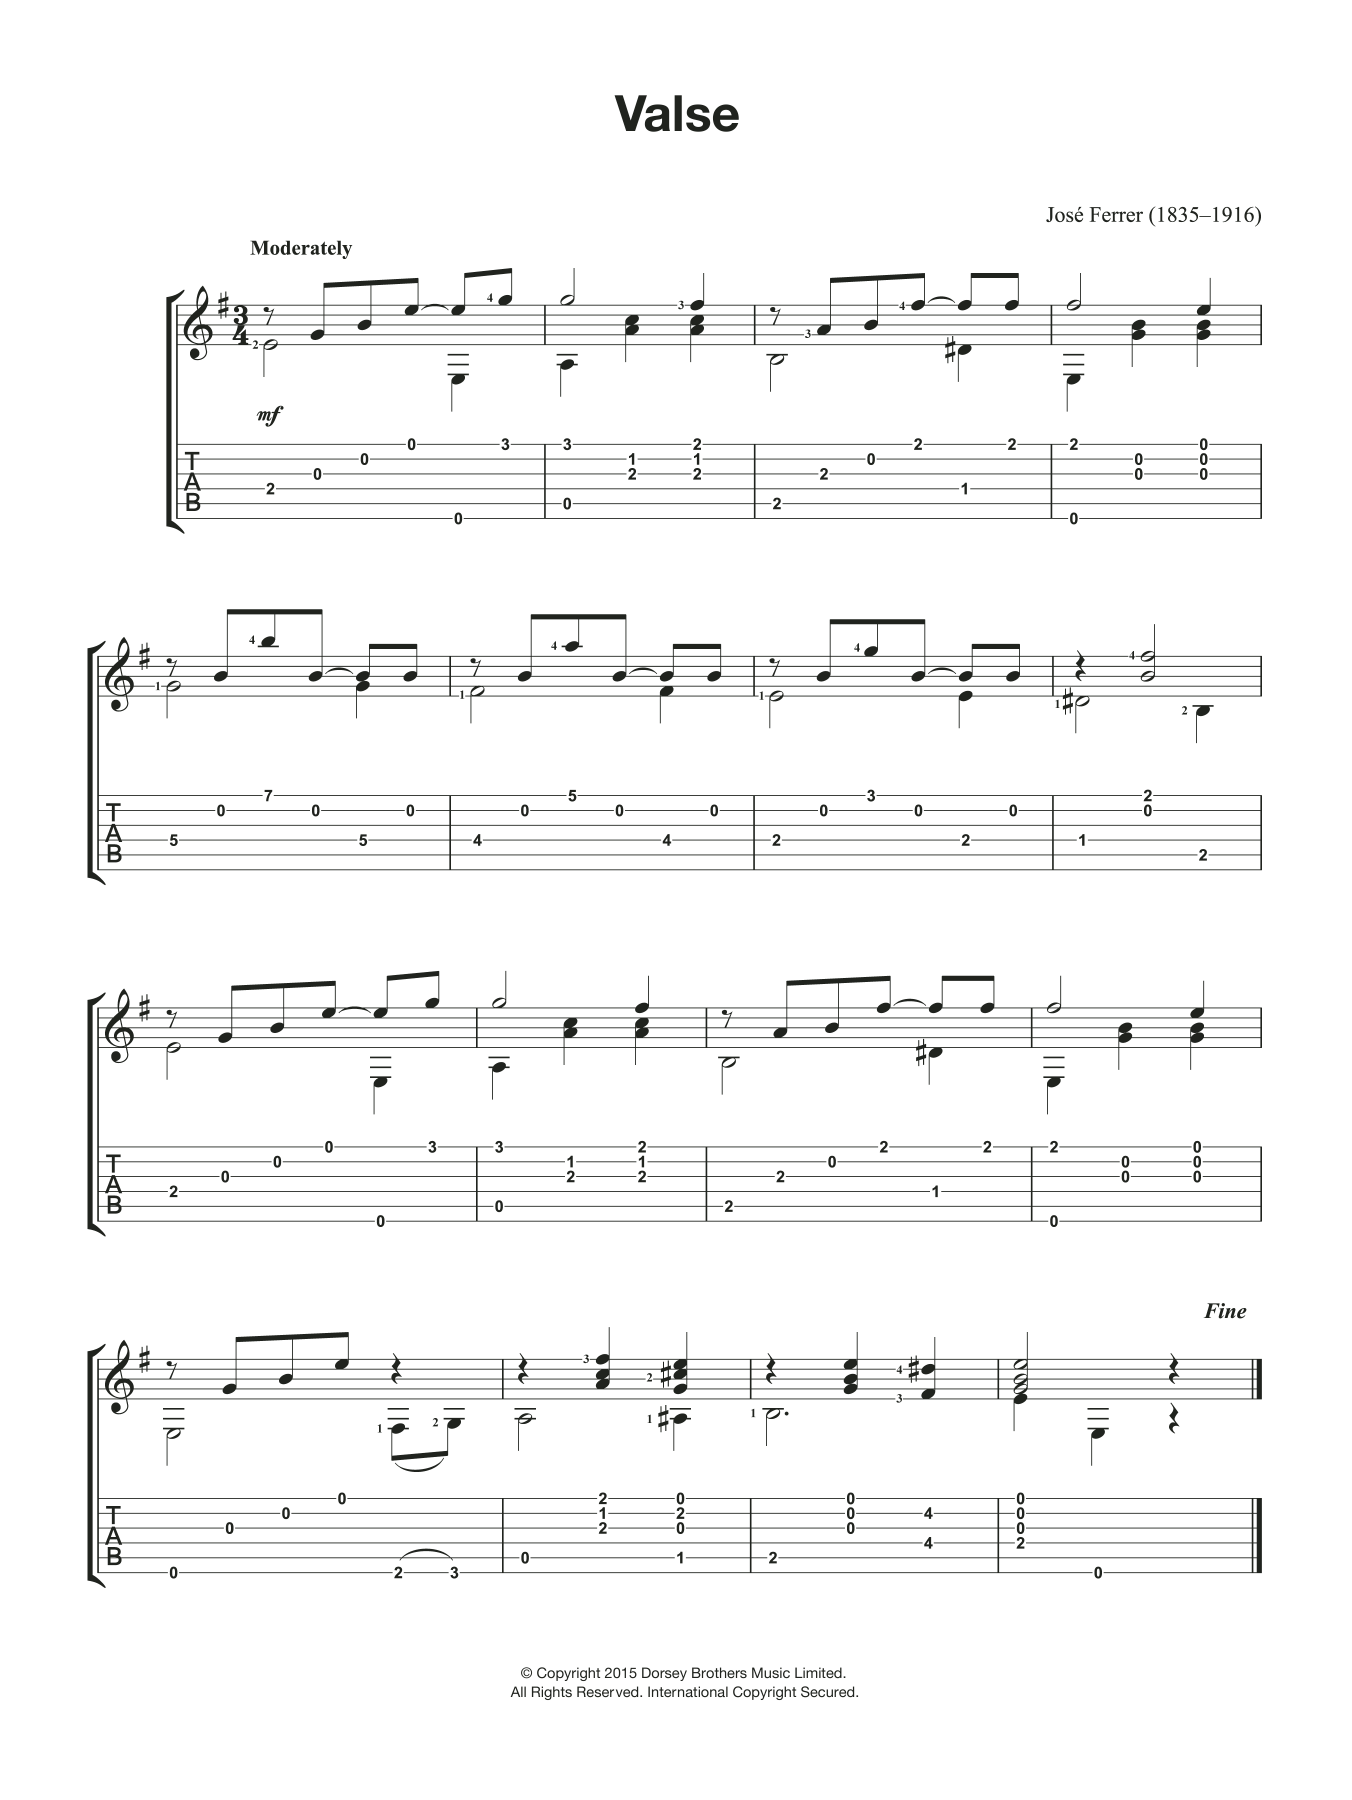 Jose Ferrer Valse sheet music notes and chords arranged for Easy Guitar